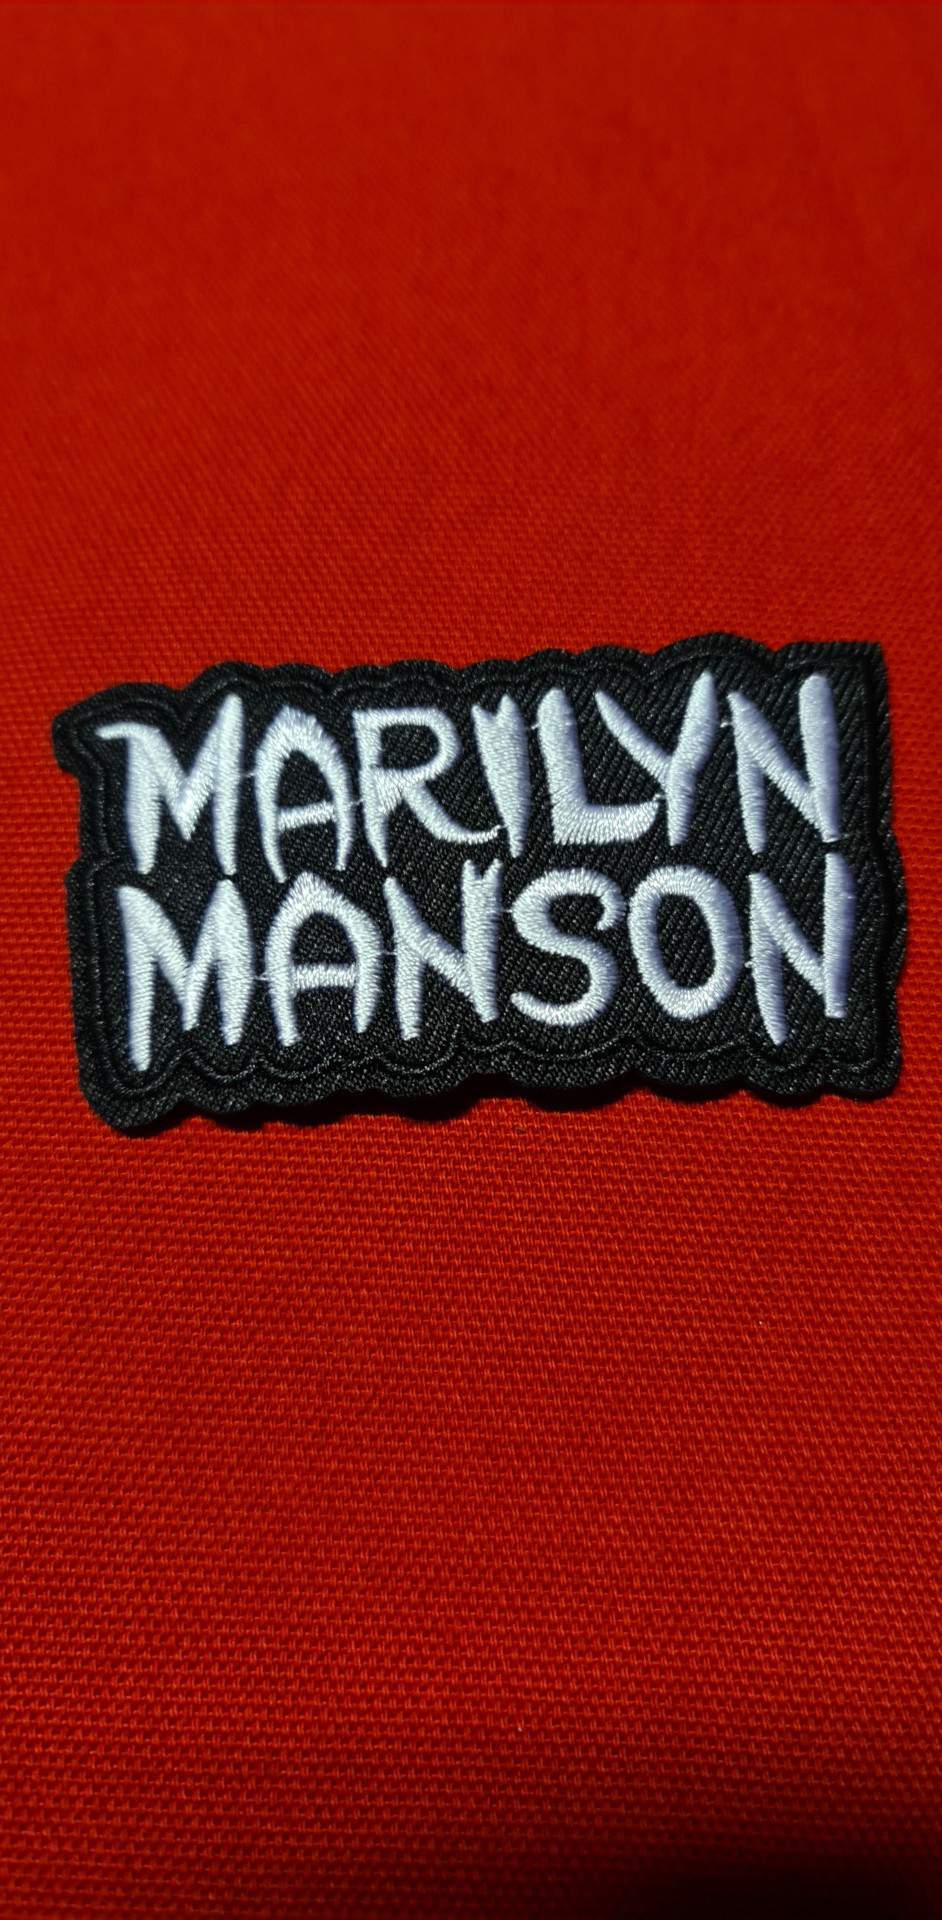 MARILYN MANSON FELVARRÓ